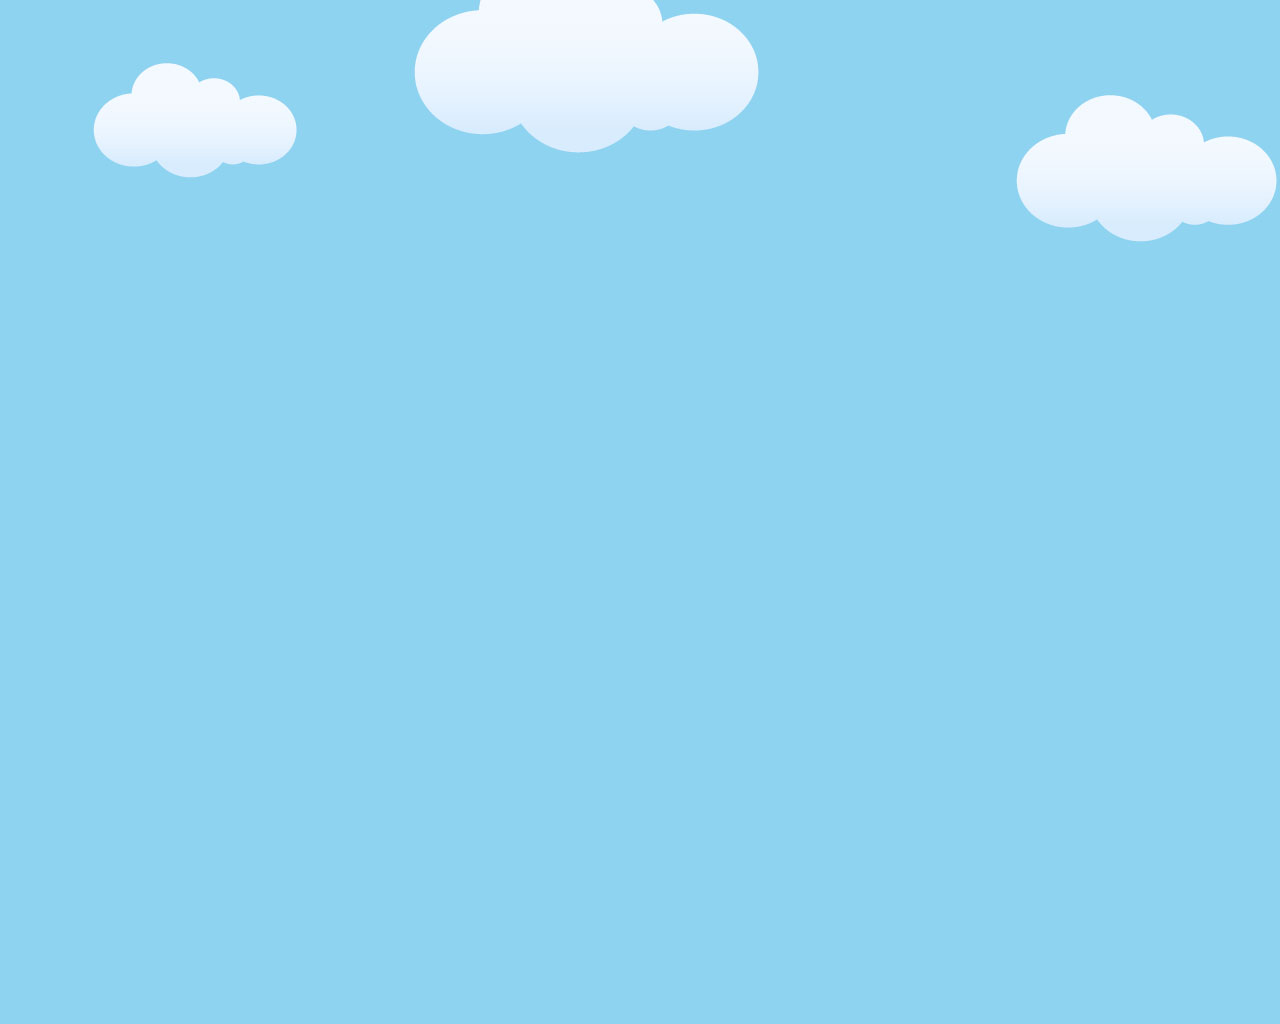 Powerpoint Templates Ppt Background, Clouds On Blue - Ảnh Làm Slide -  1280x1024 Wallpaper 